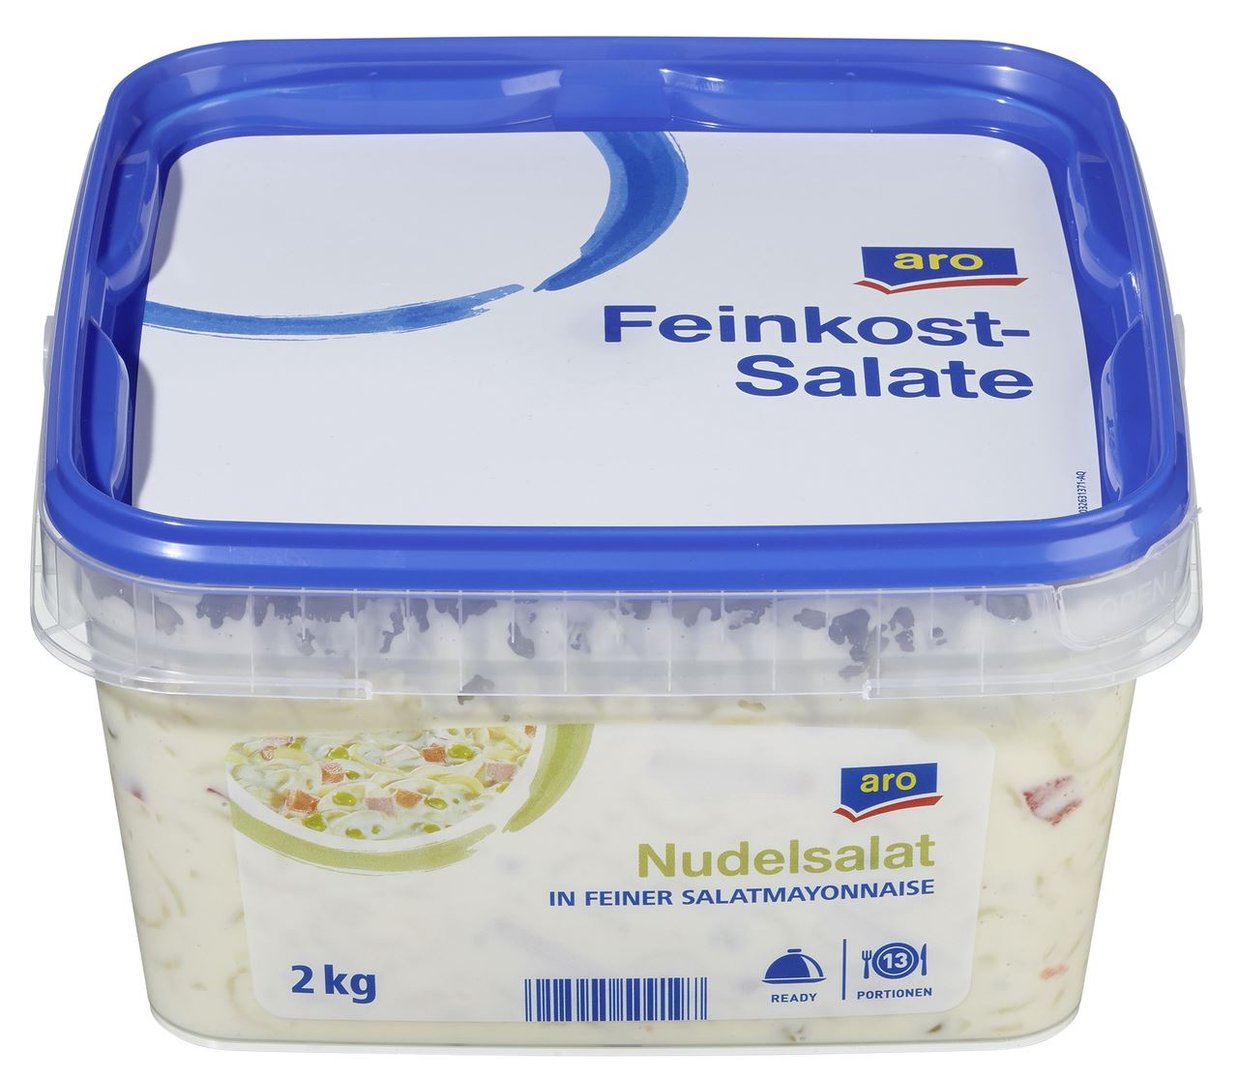 aro - Nudelsalat in feiner Salatmayonnaise - 2 kg Packung